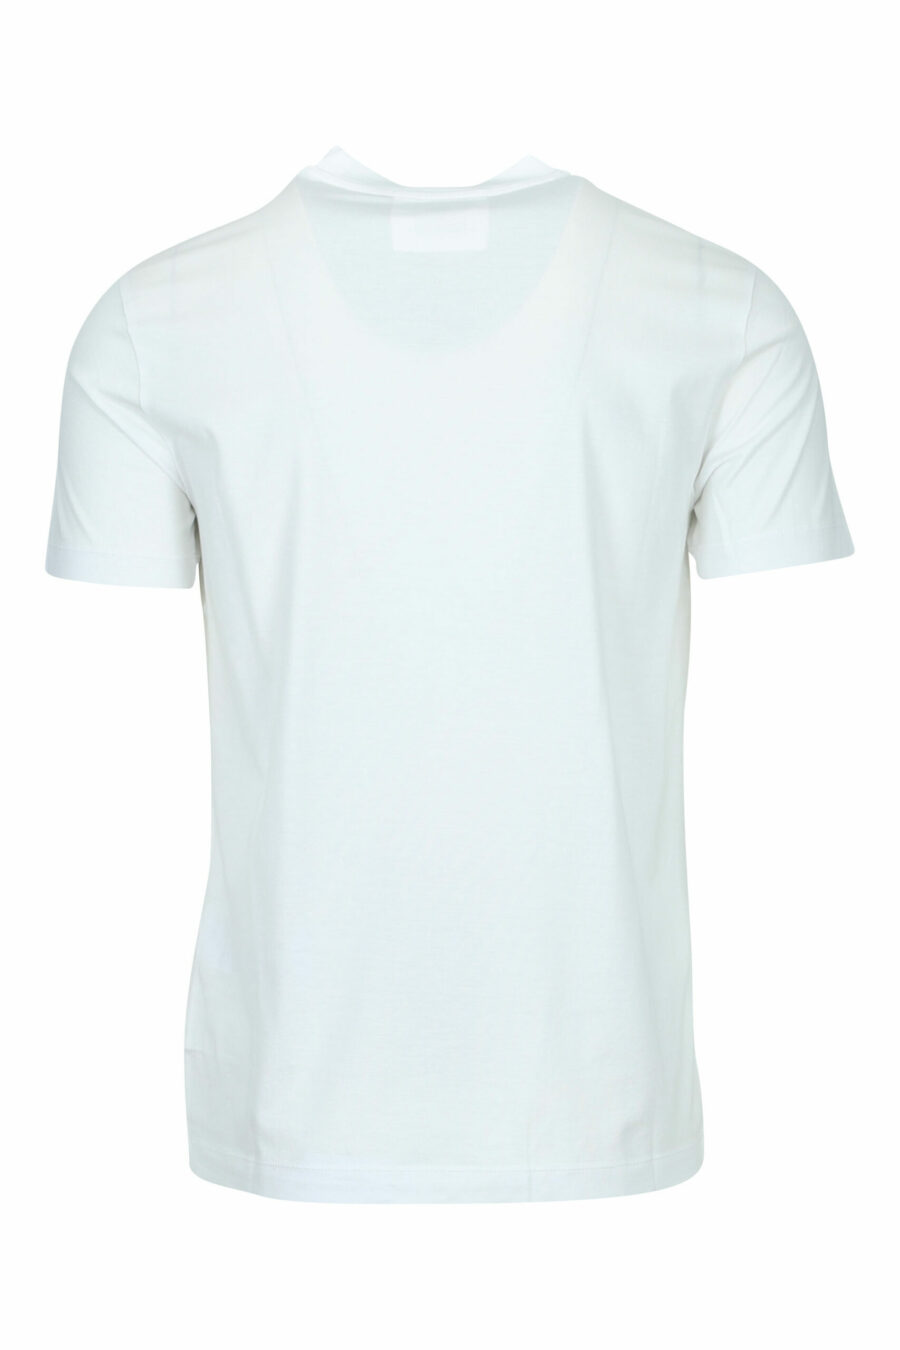 Camiseta blanca con minilogo "emporio" - 8059516200147 1 scaled